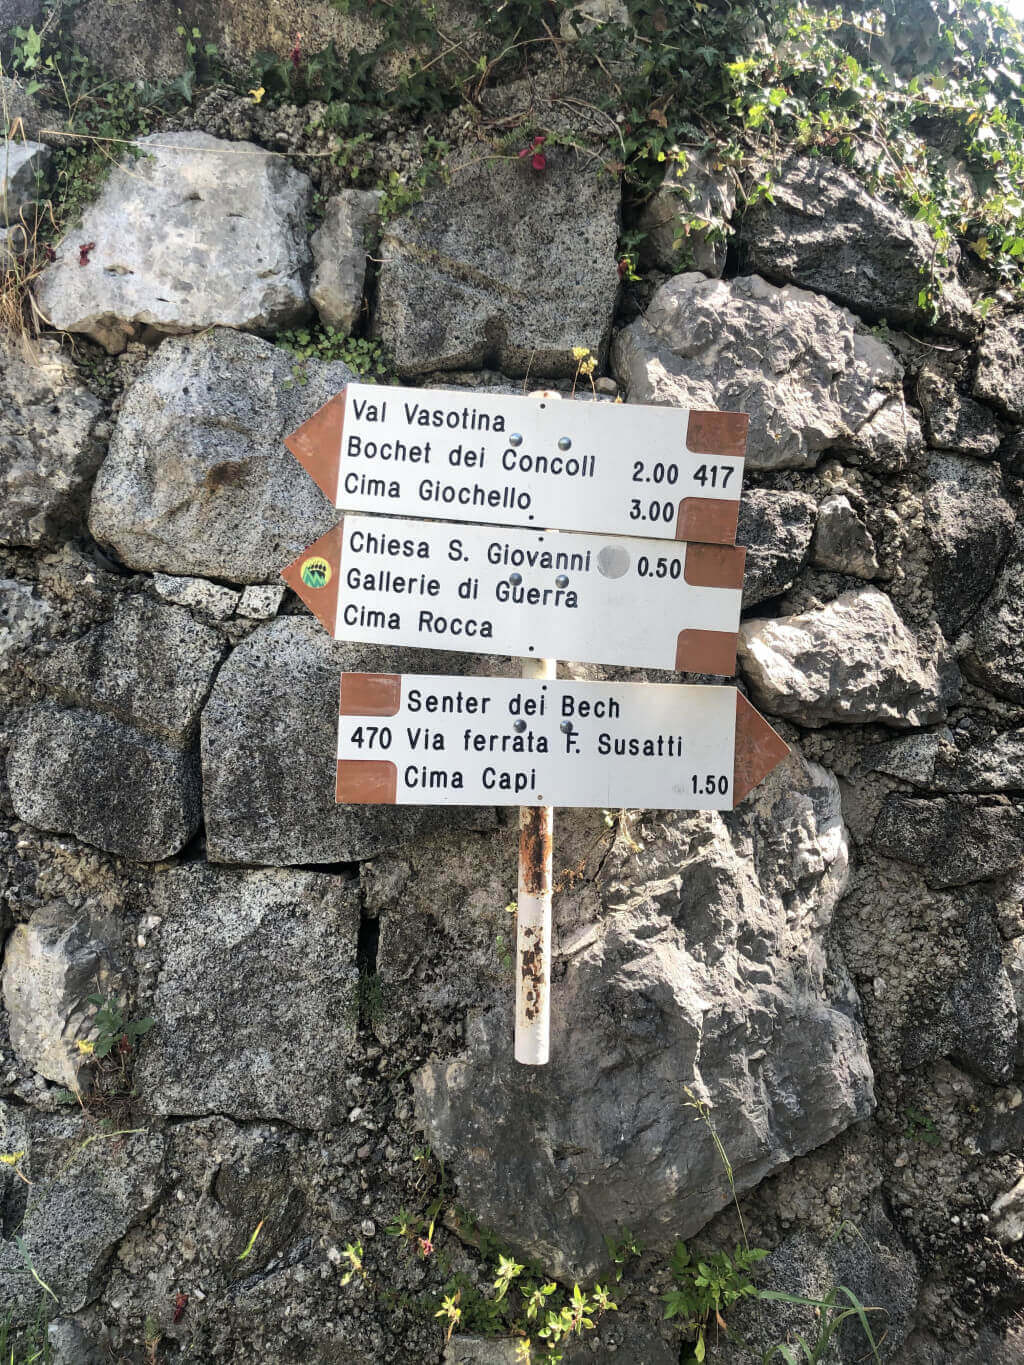 Signpost via ferrata F. Susatti Cima Capi path 470 Lake Garda